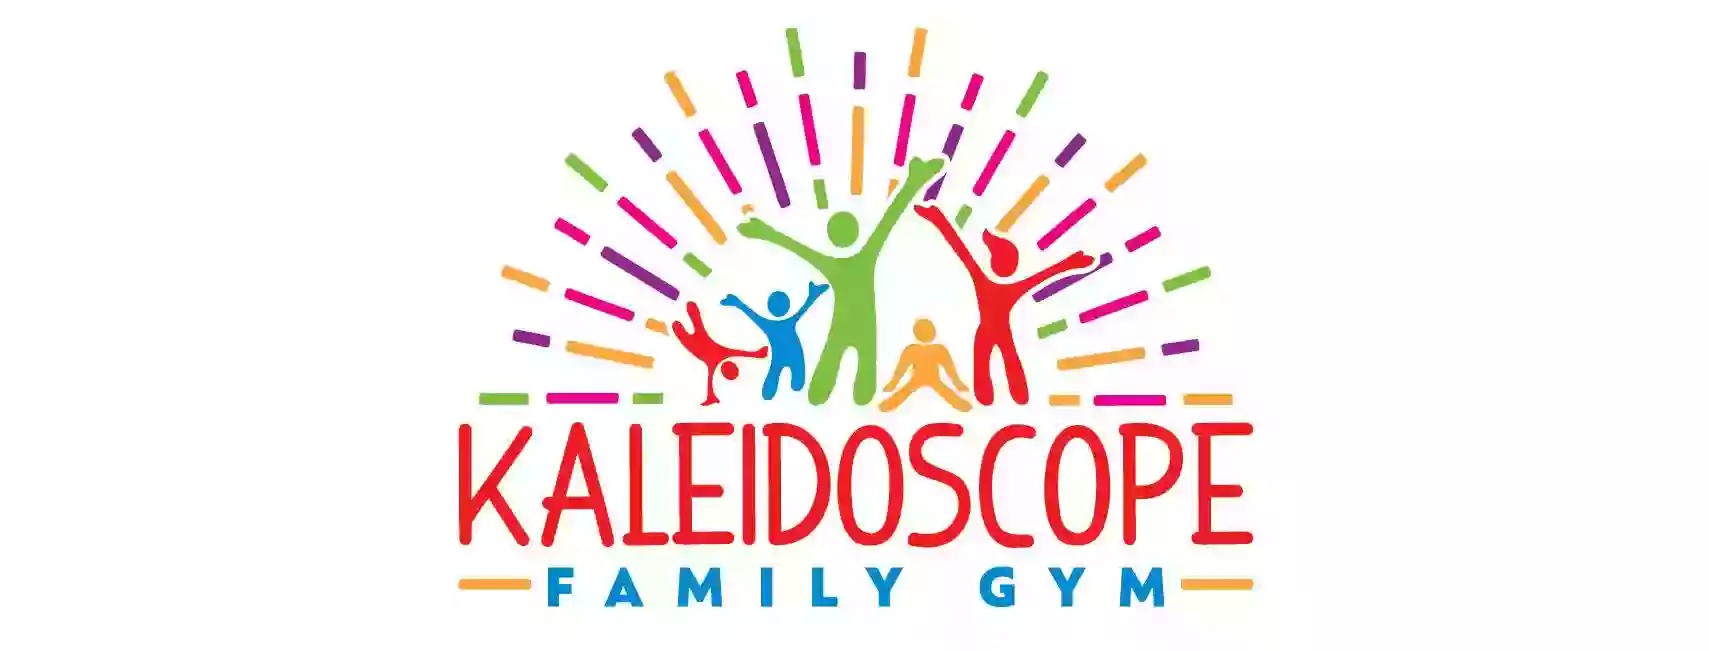 Kaleidoscope Family Gym